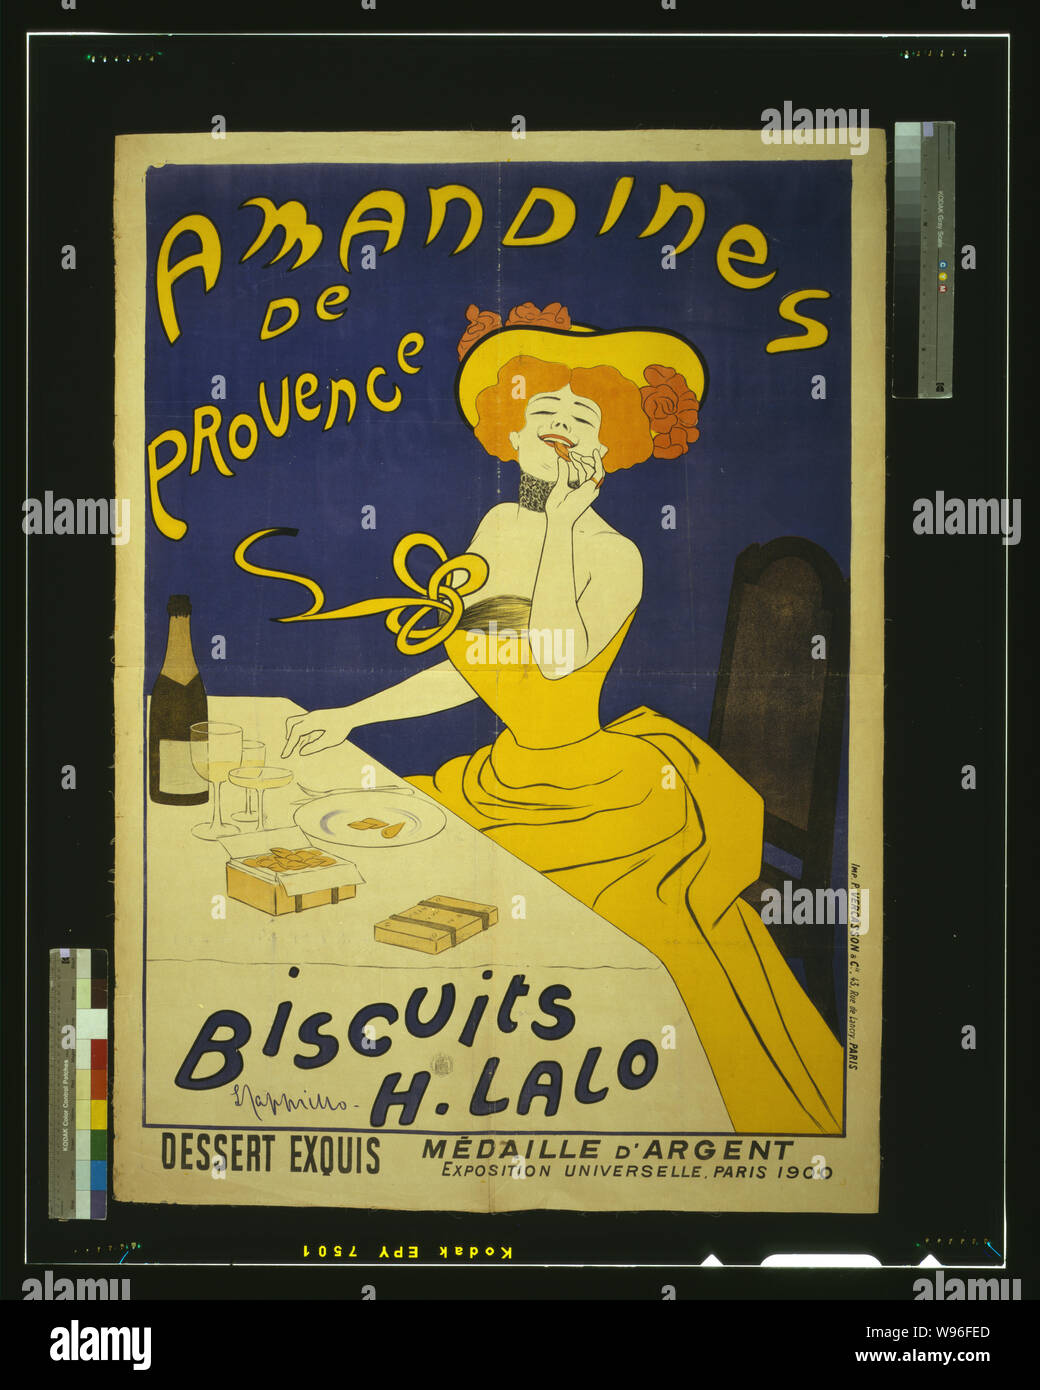 Amandines de Provence. Biscuits H. Lalo / L. Cappiello. Stock Photo